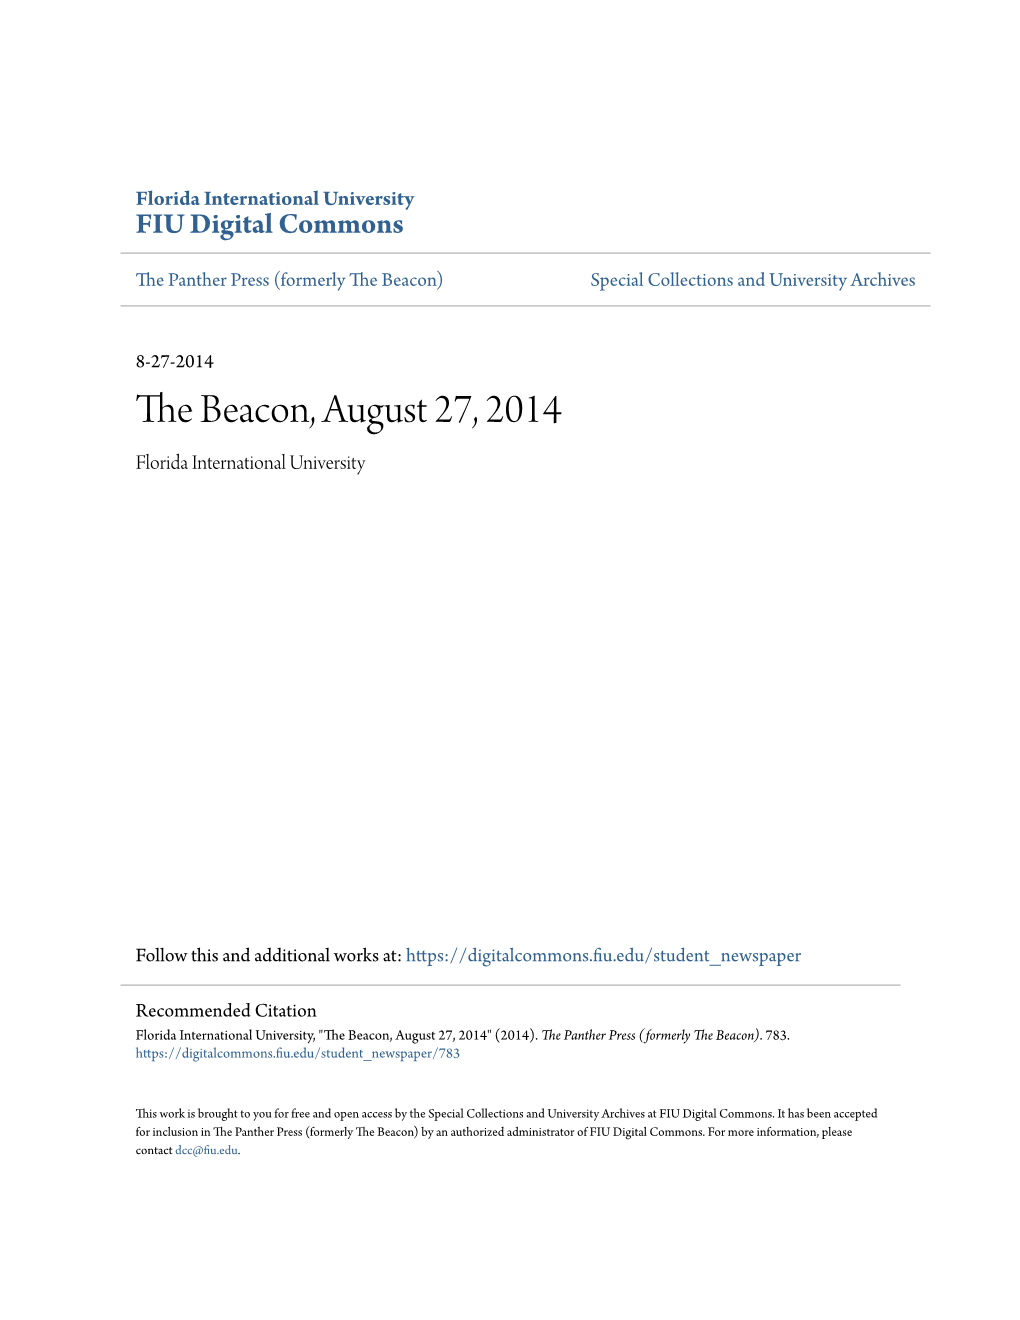 The Beacon, August 27, 2014 Florida International University